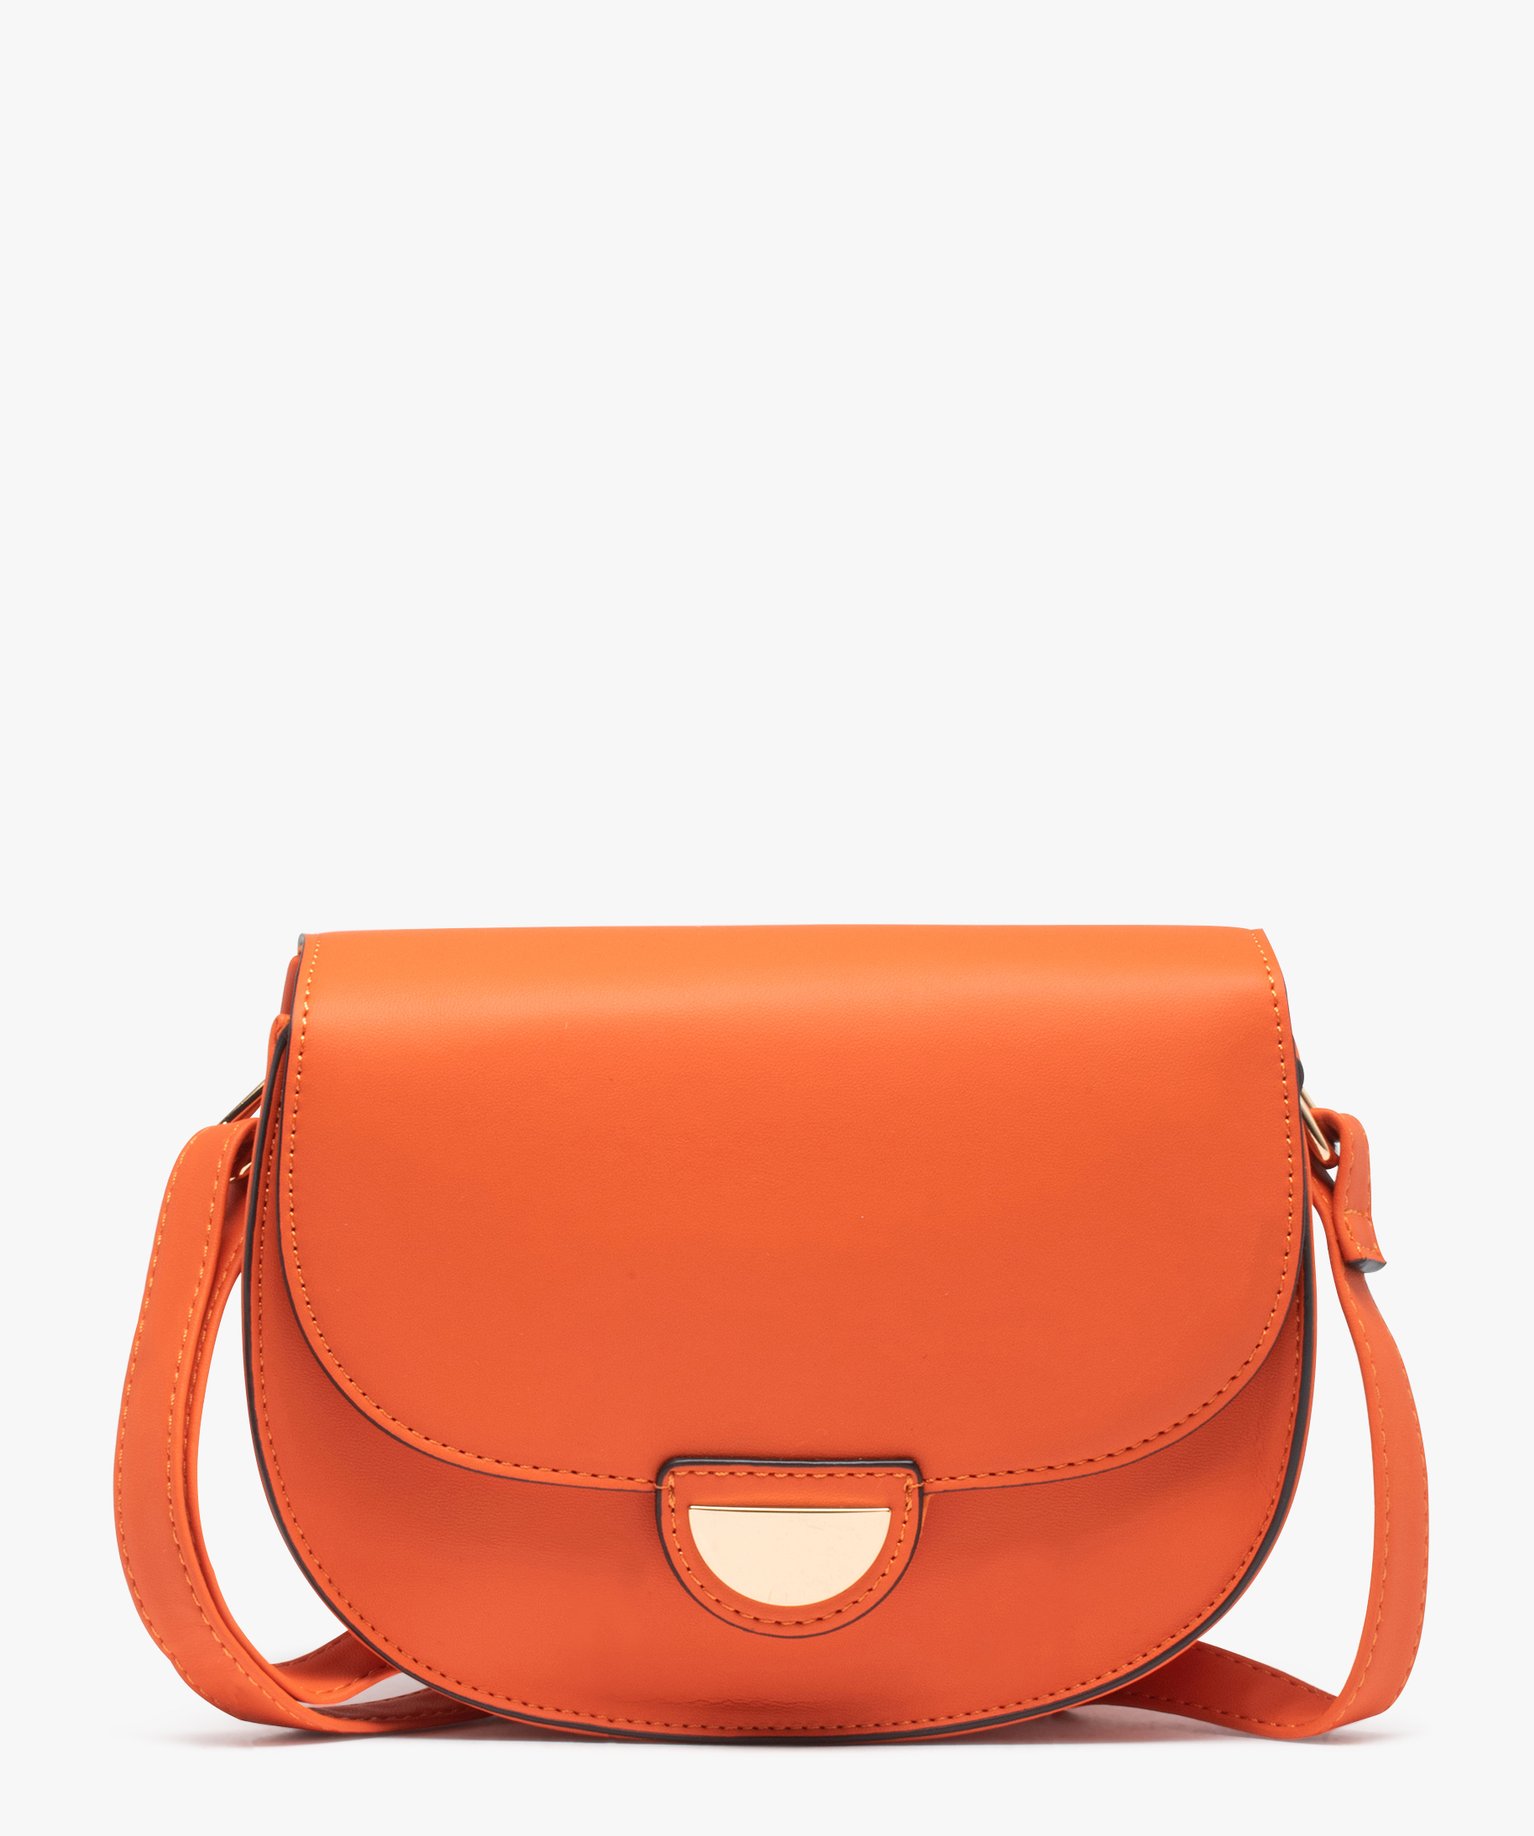 sac femme forme demi-lune avec large rabat orange sacs bandouliere